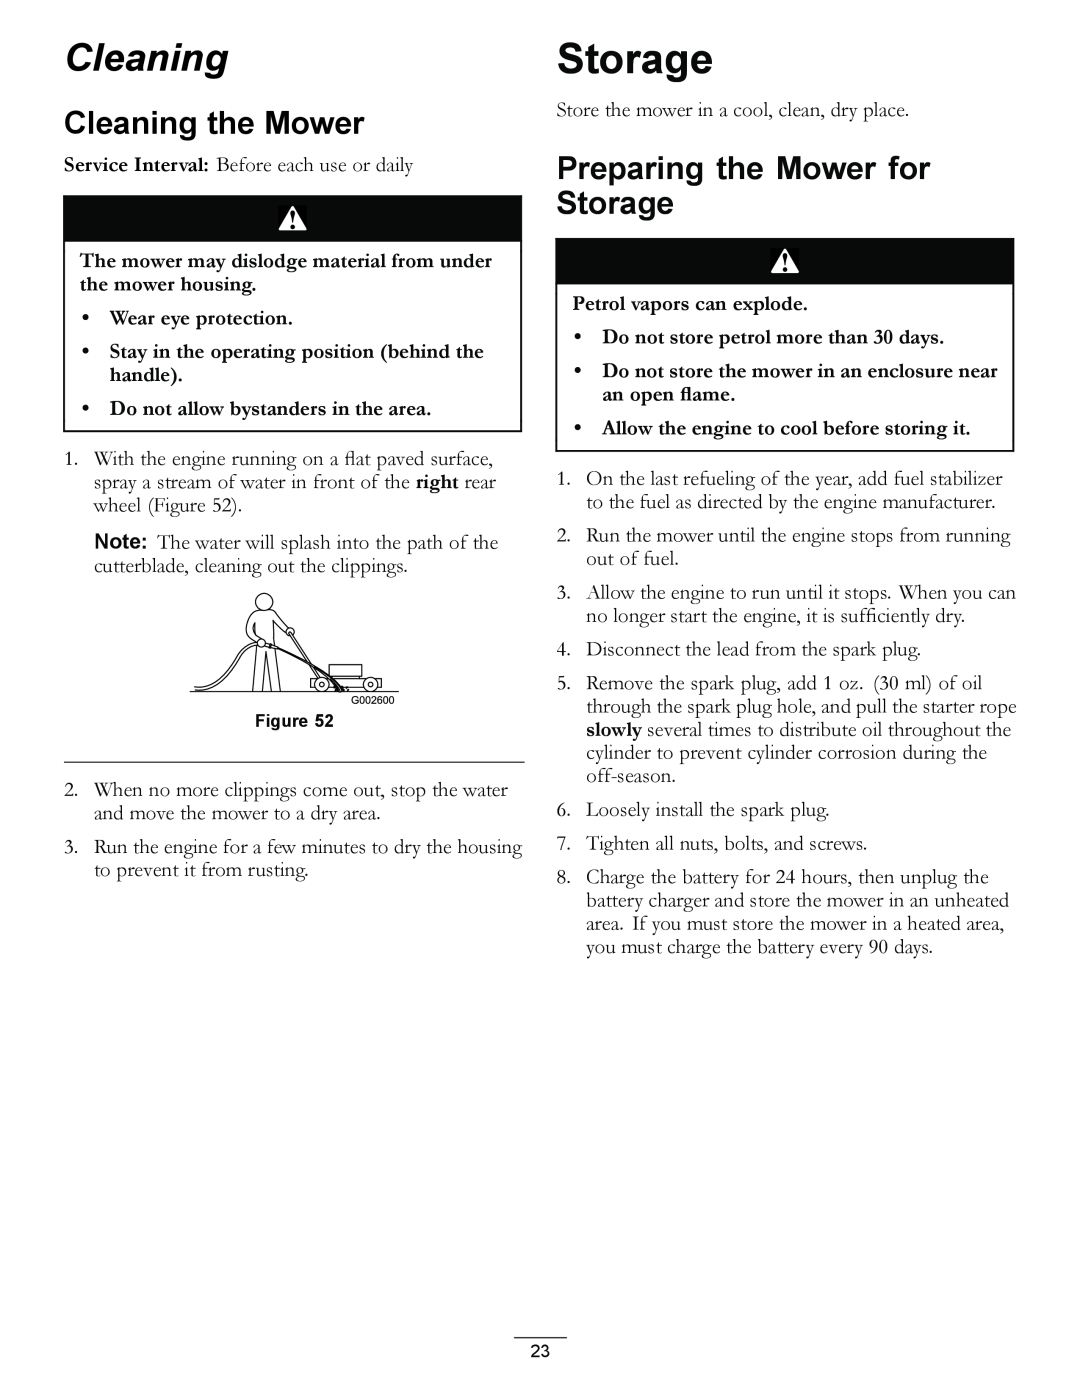 Hayter Mowers R53S manual Cleaning the Mower, Preparing the Mower for Storage 